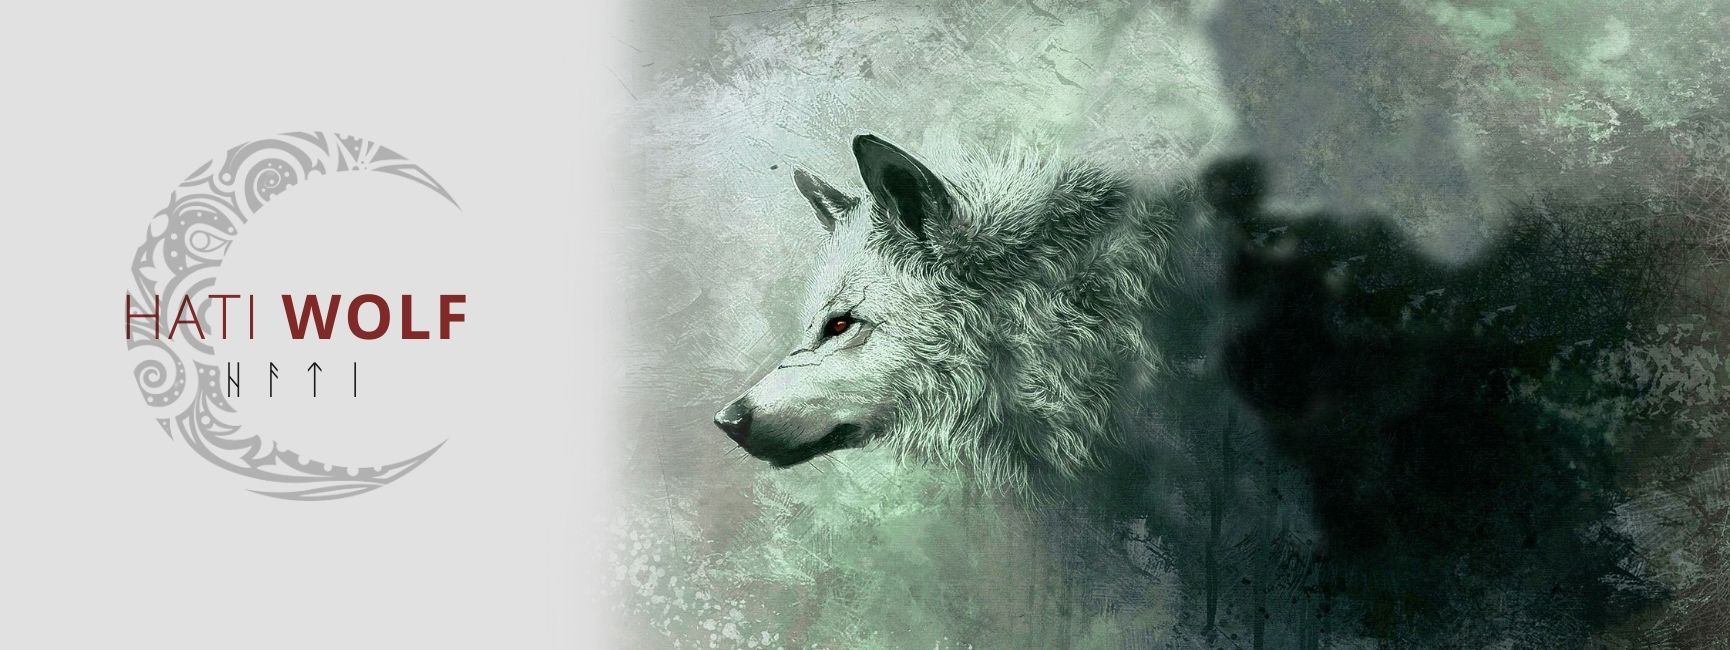 Hati wolf